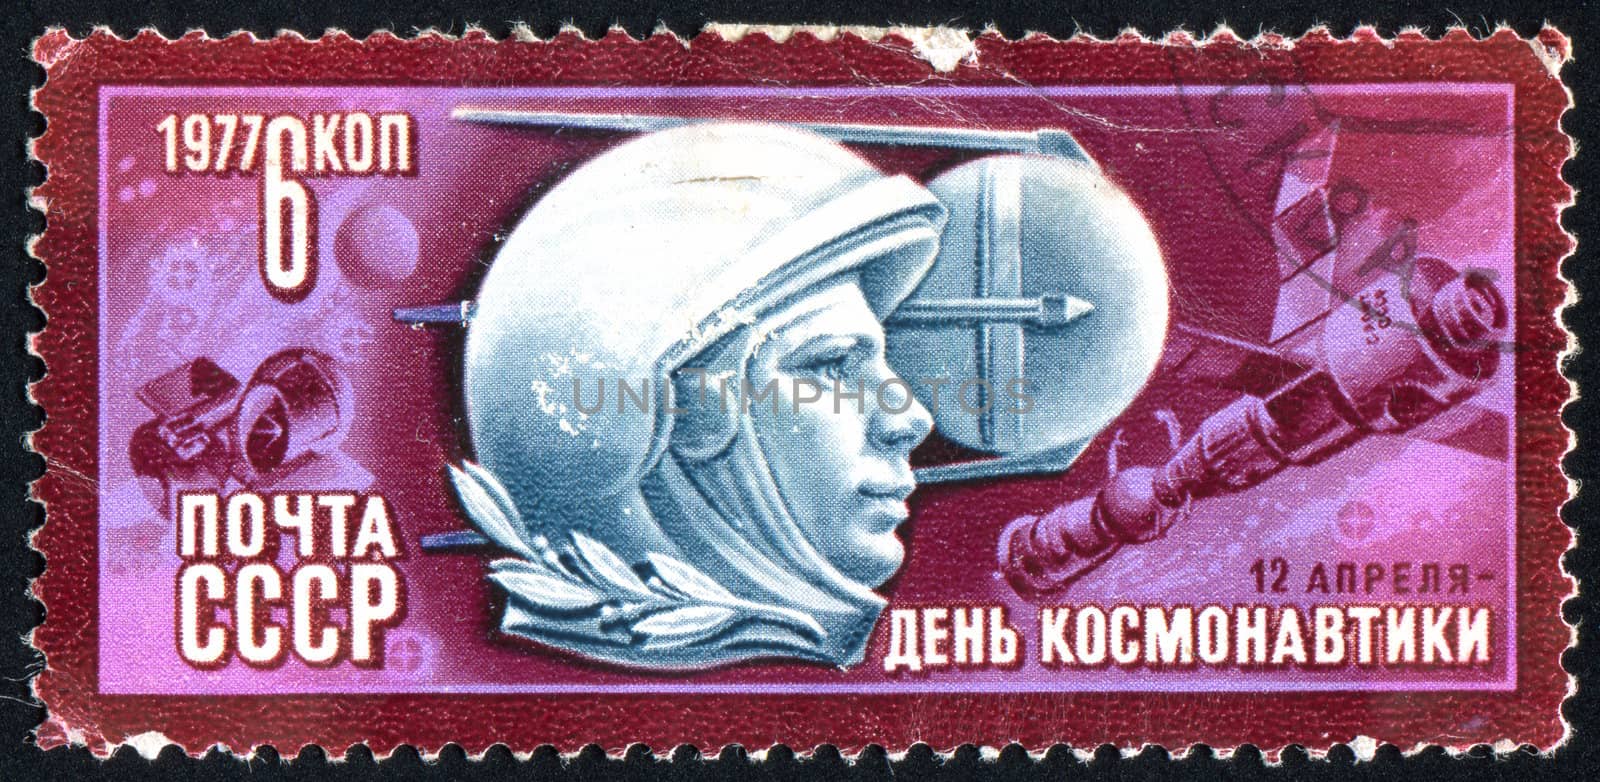 RUSSIA - CIRCA 1977: stamp printed by Russia, shows Yuri A. Gagarin, circa 1977.